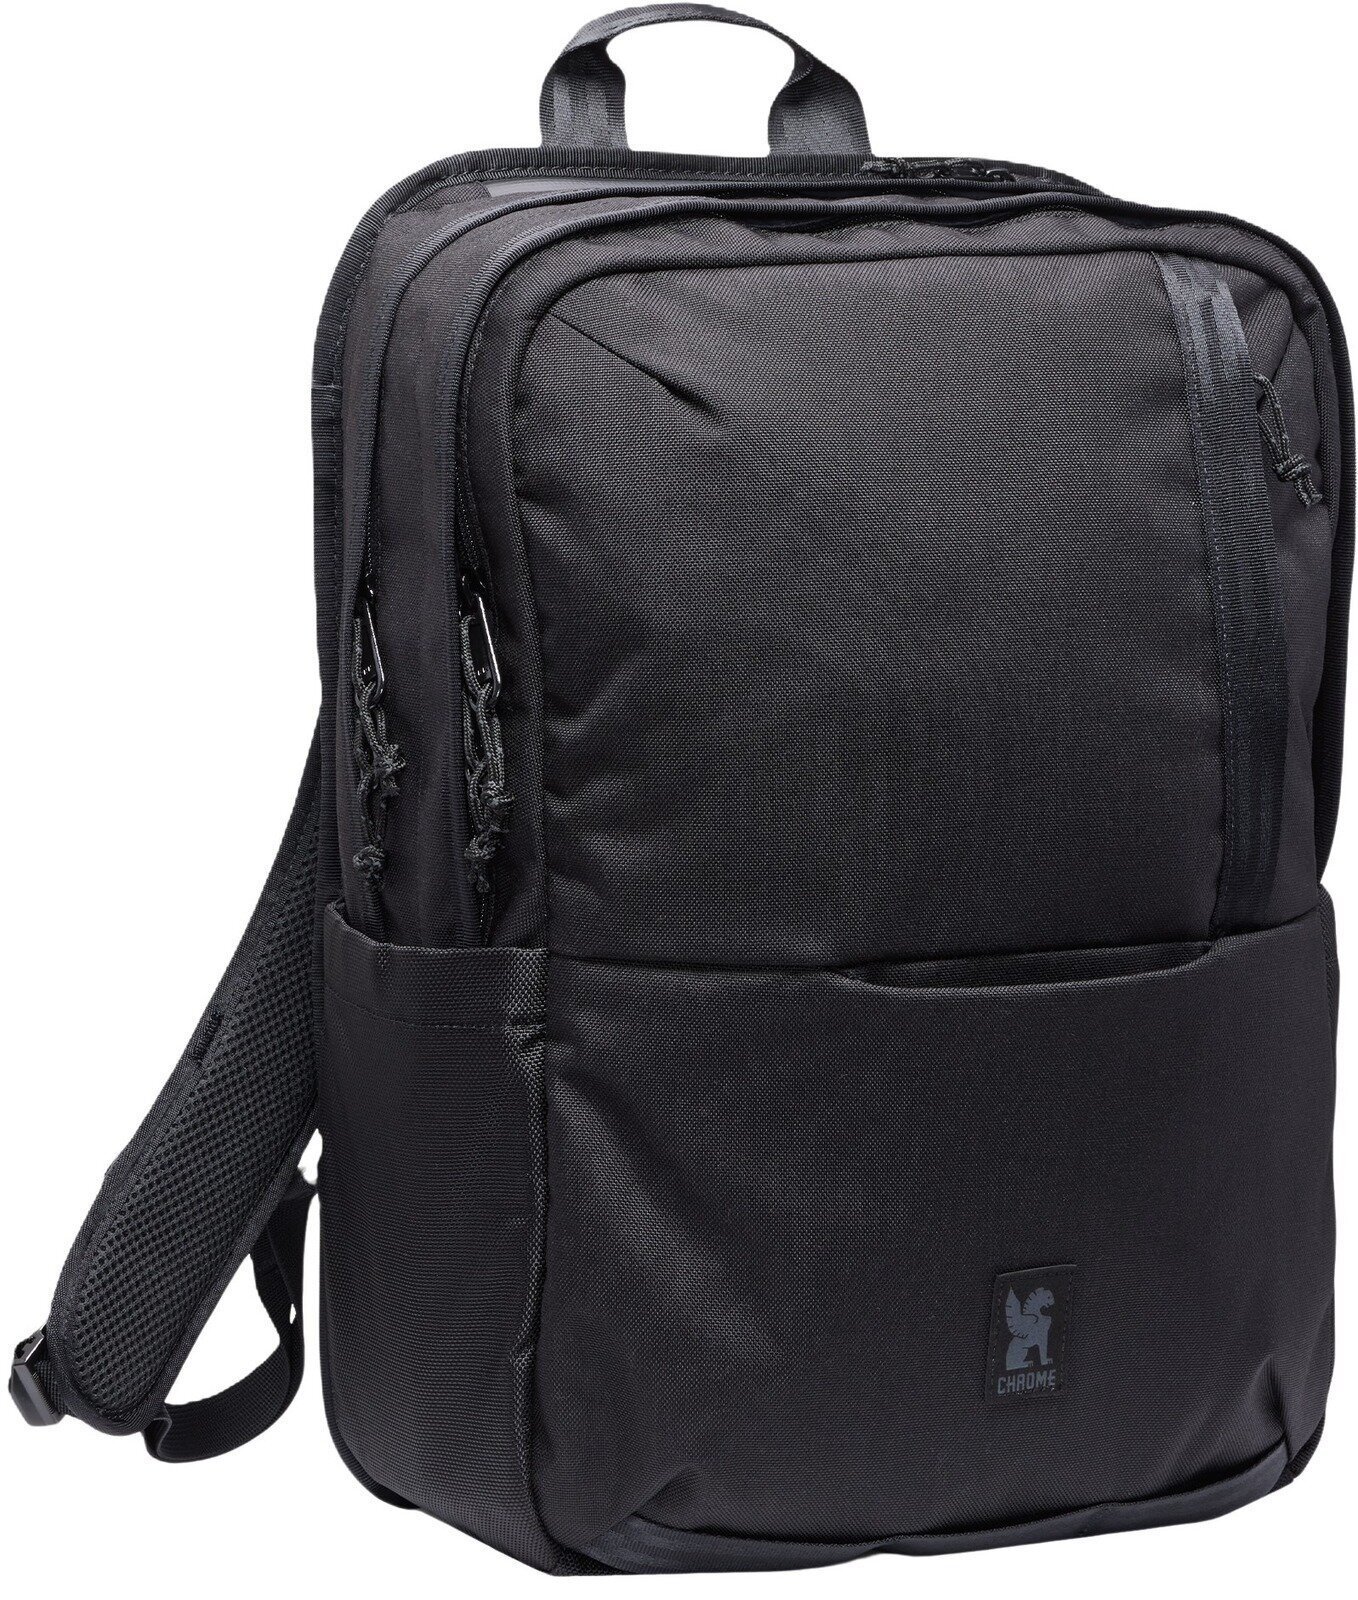 Lifestyle sac à dos / Sac Chrome Hawes Backpack Black 26 L Sac à dos